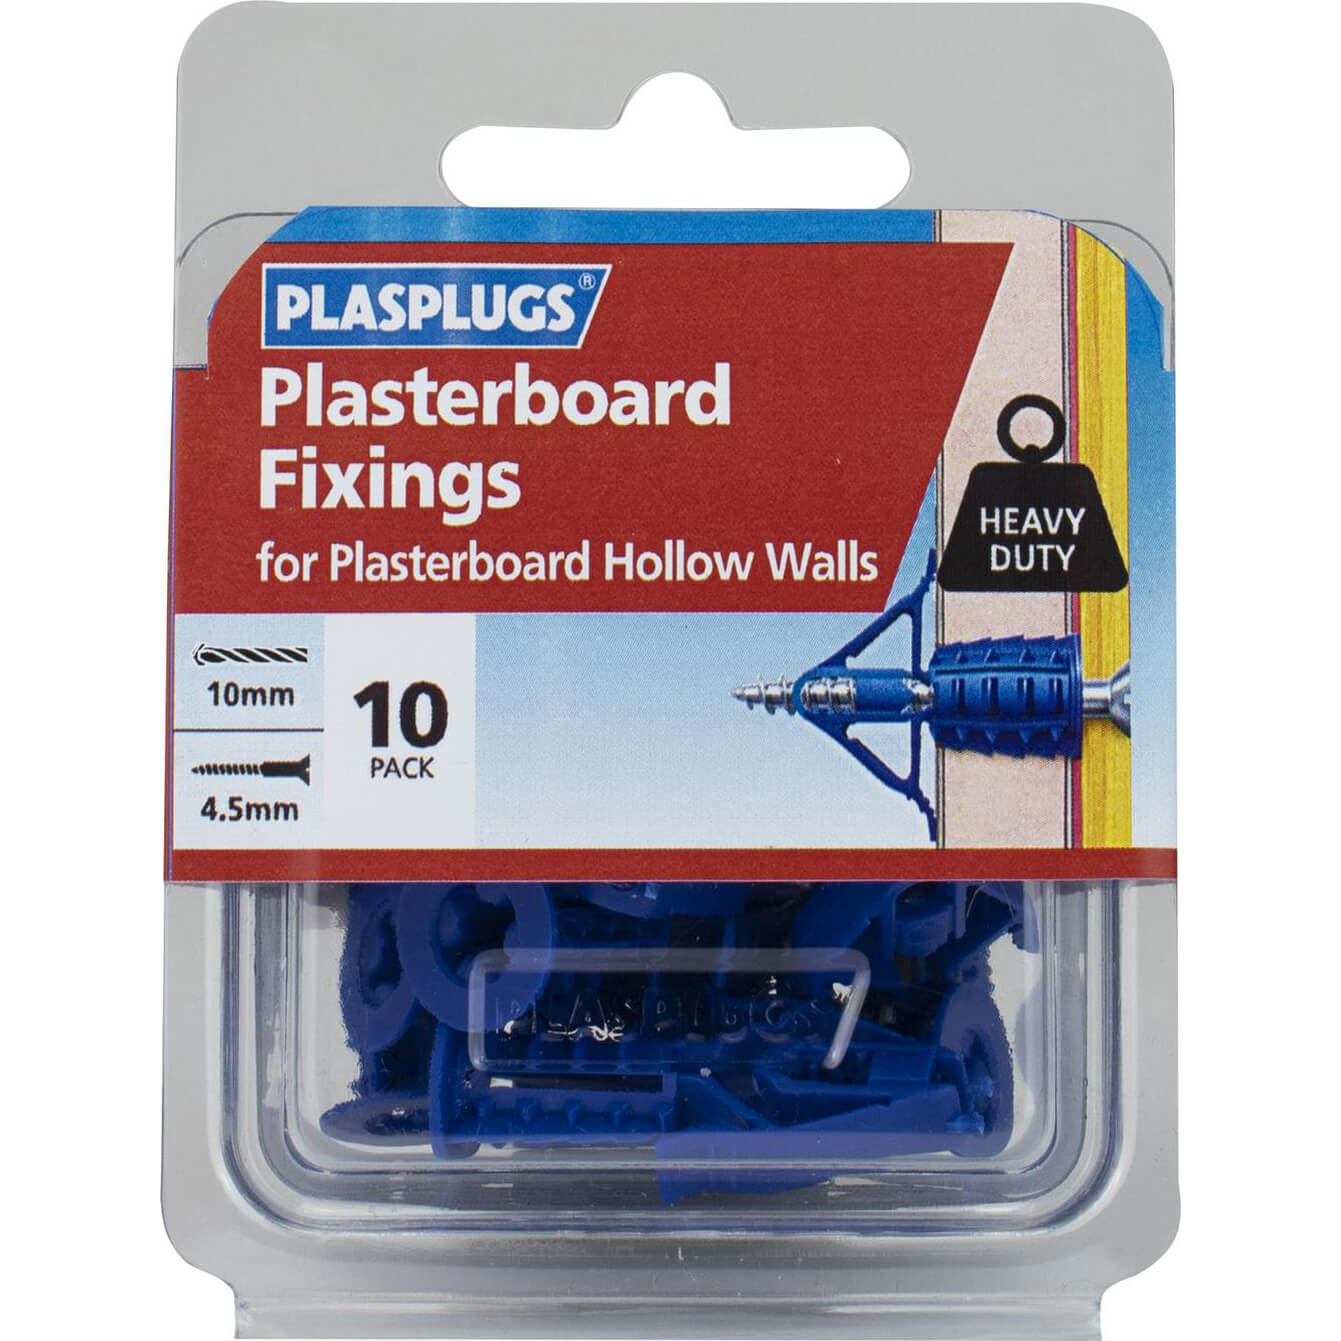 Image of Plasplugs Heavy Duty Plasterboard Hollow Wall Fixings Pack of 10